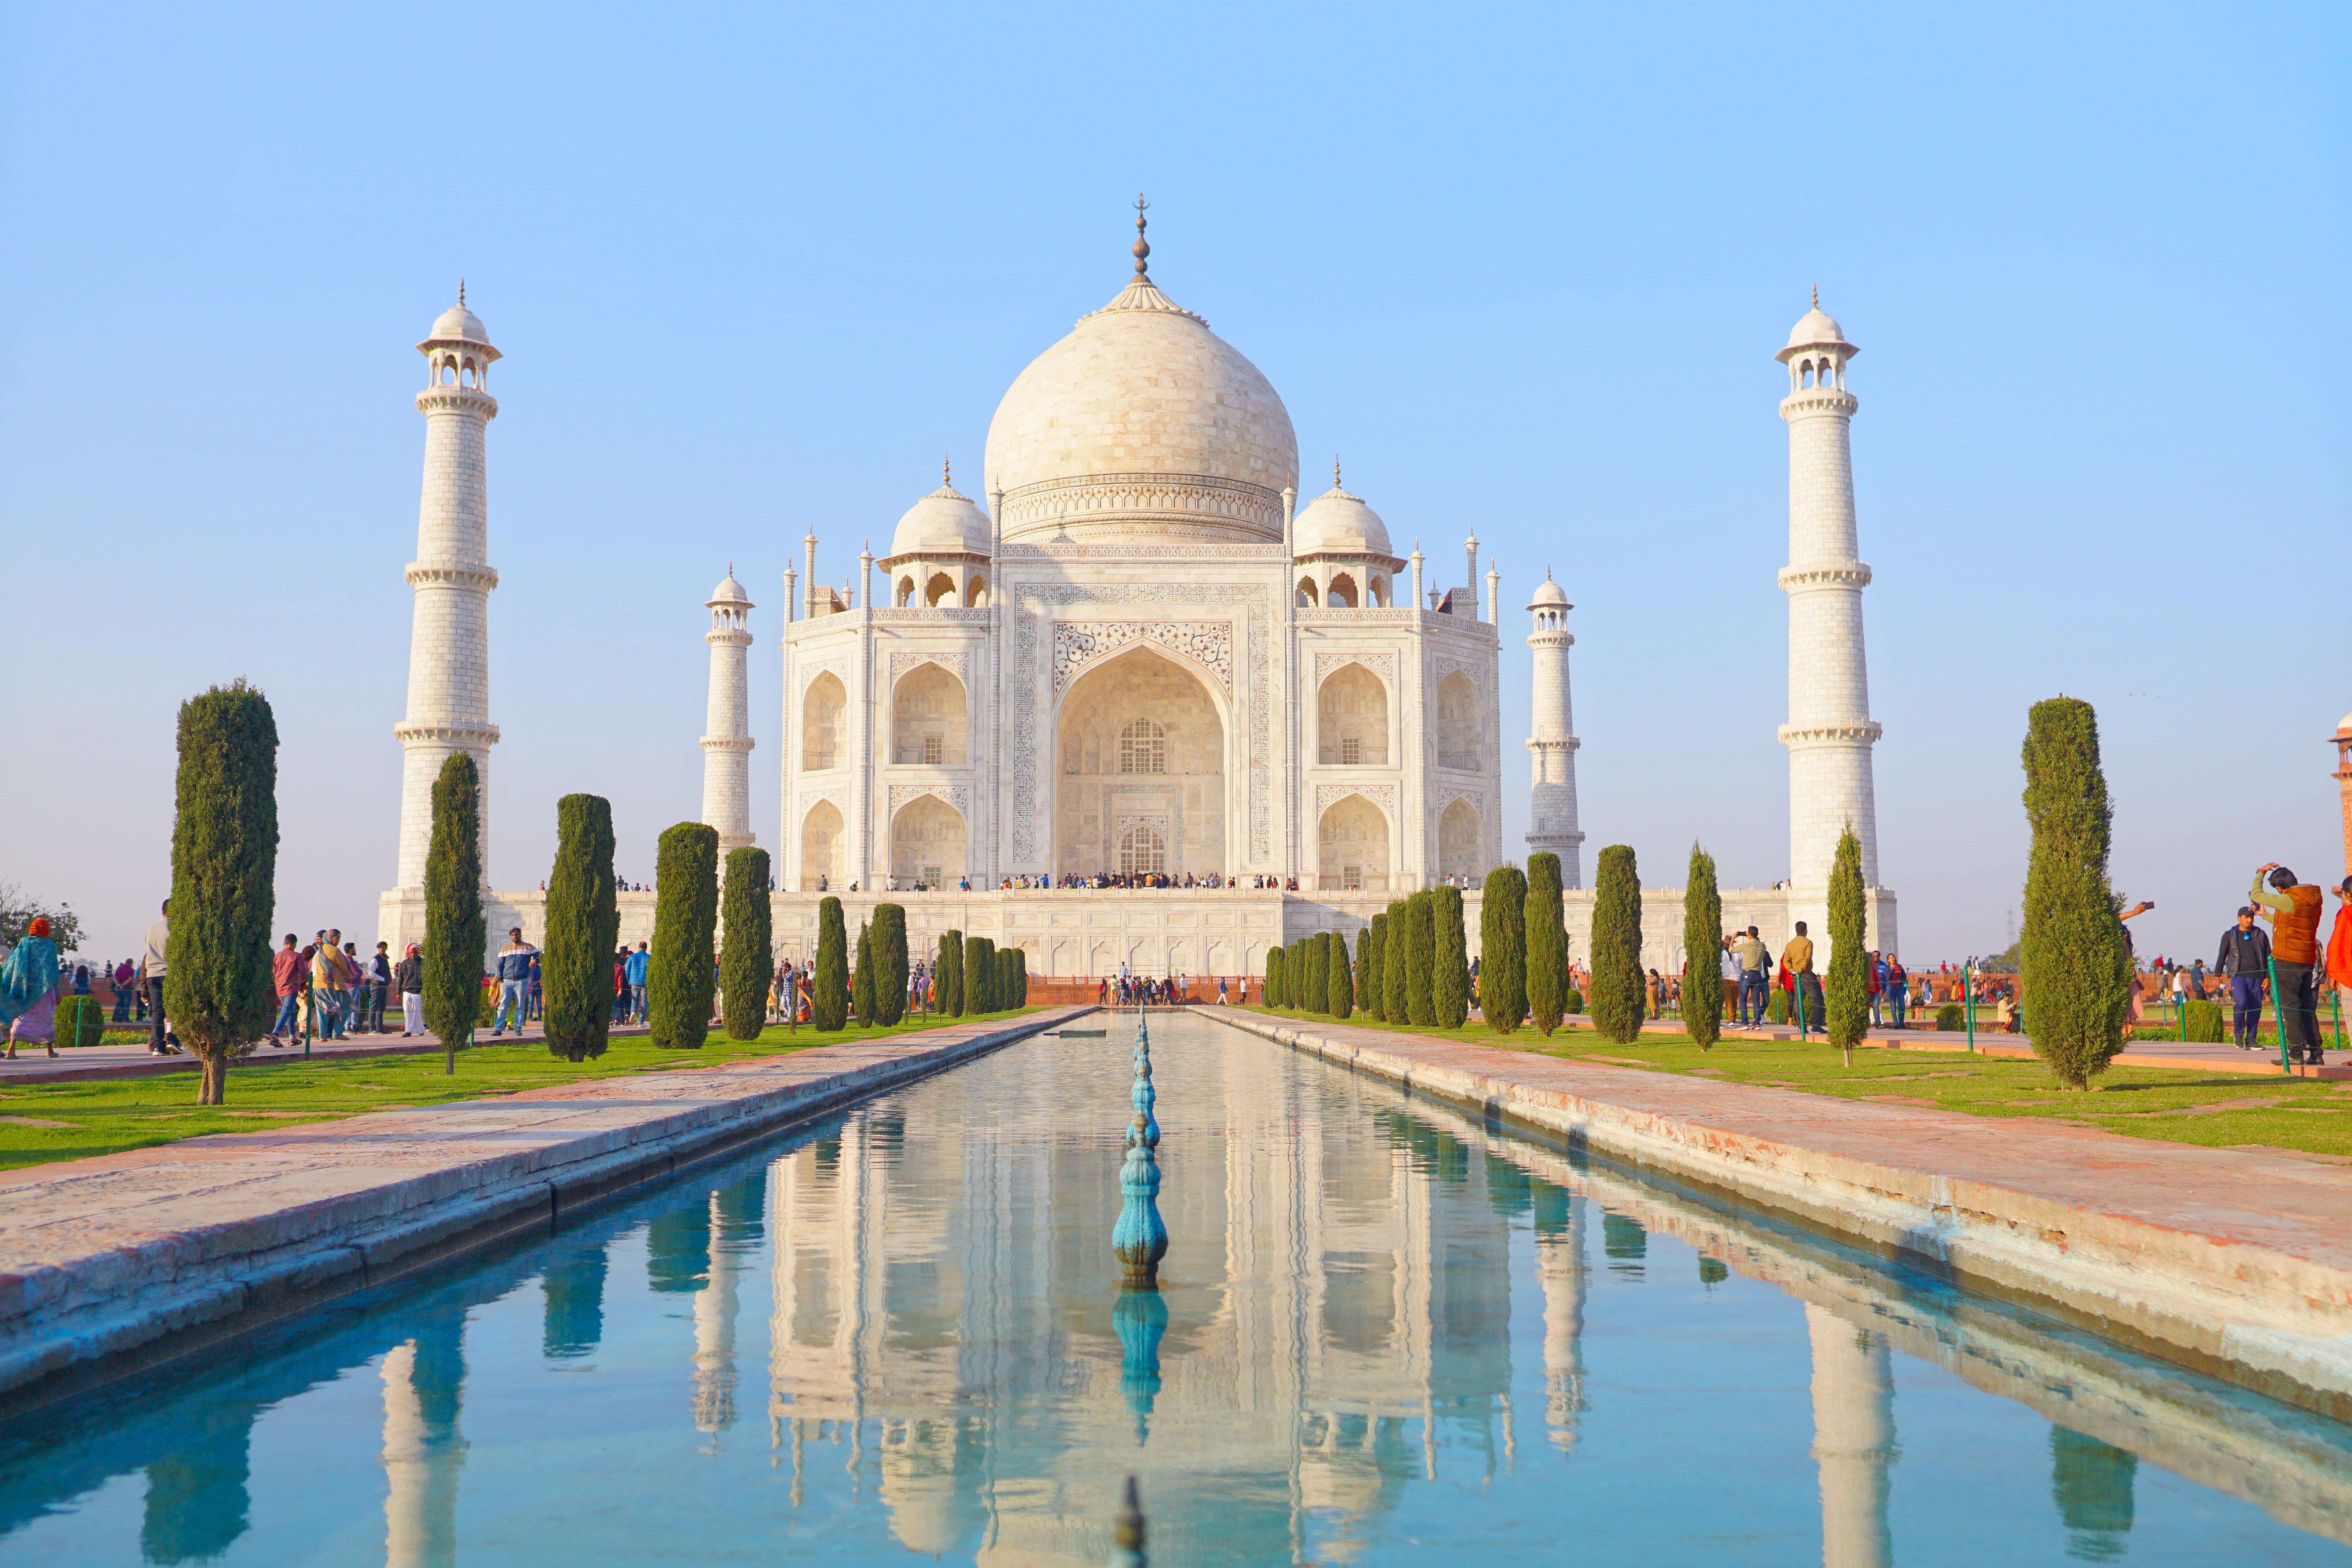 Admire the symbol of love- Taj Mahal